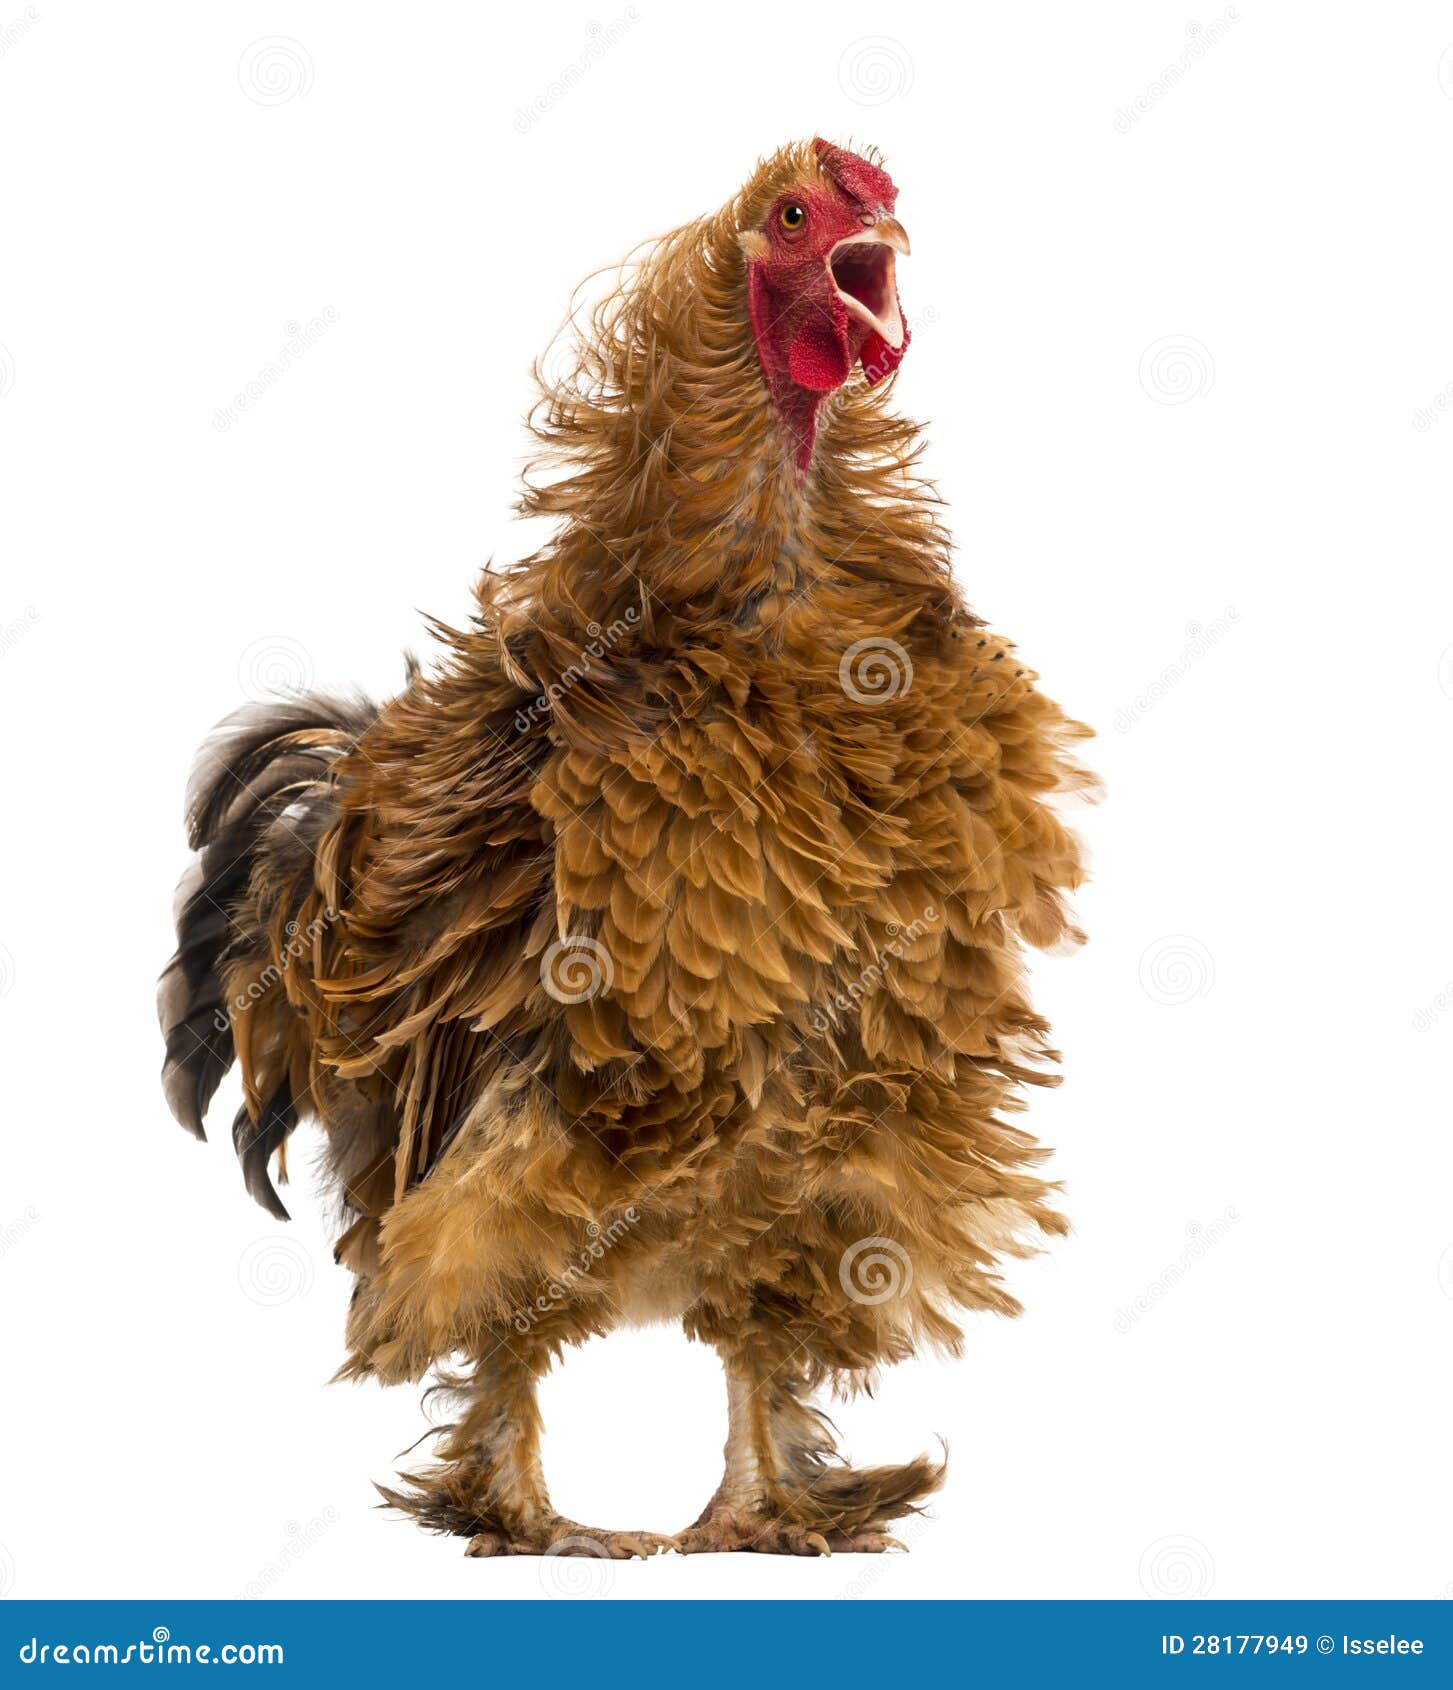 crossbreed rooster crowing, pekin and wyandotte